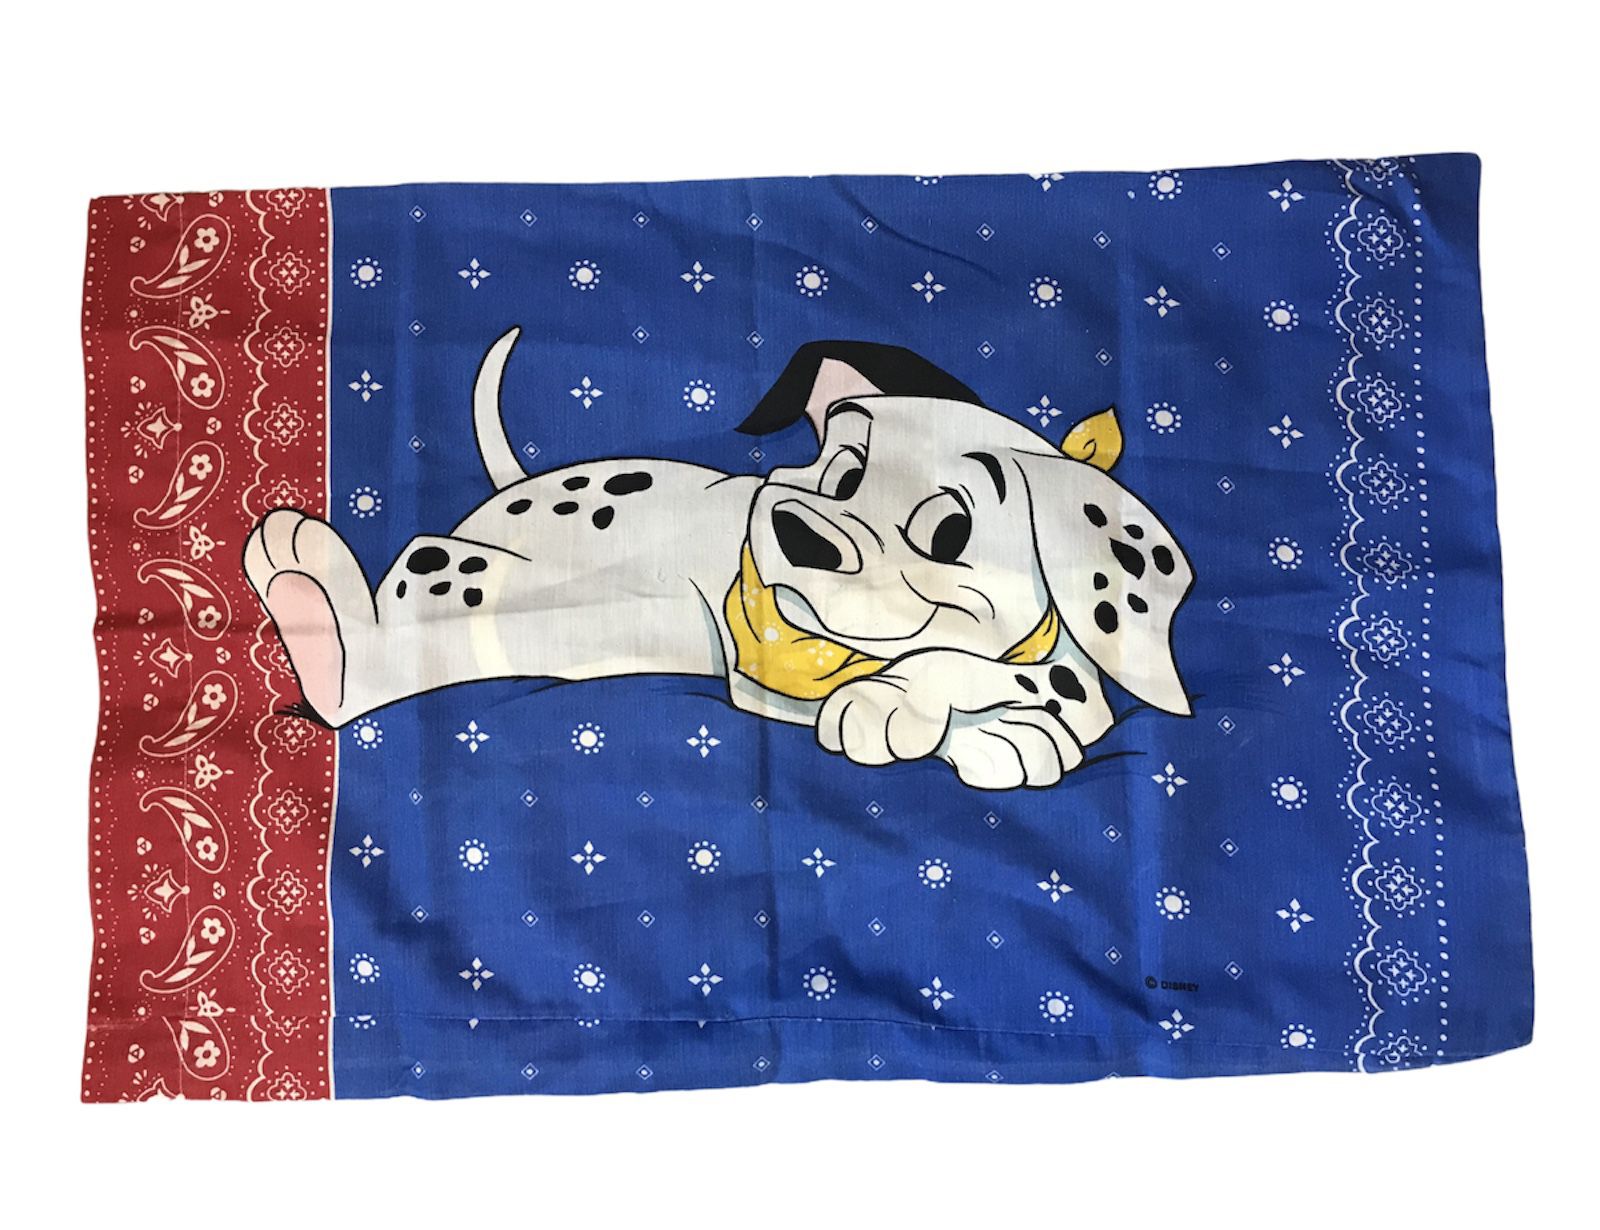 101 Dalmatians Single Standard Pillowcase Double Sided Disney